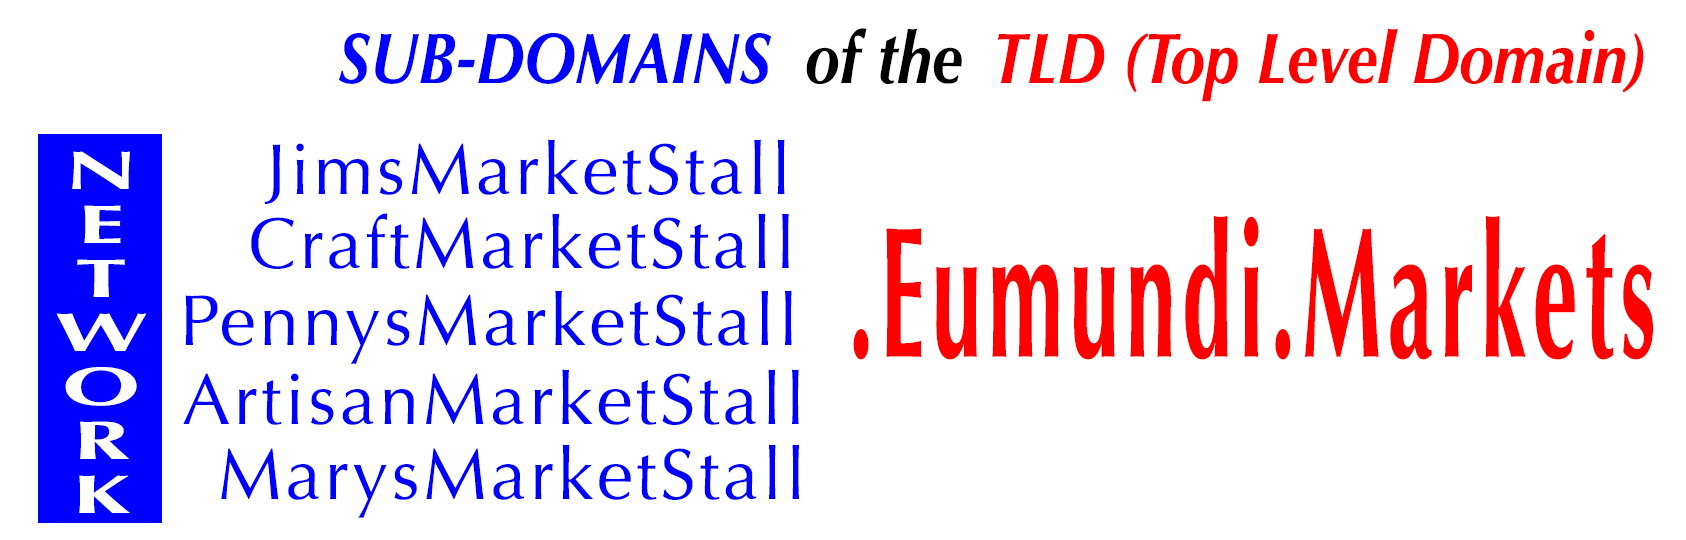 EUMUNDI.MARKETS Sub Domains